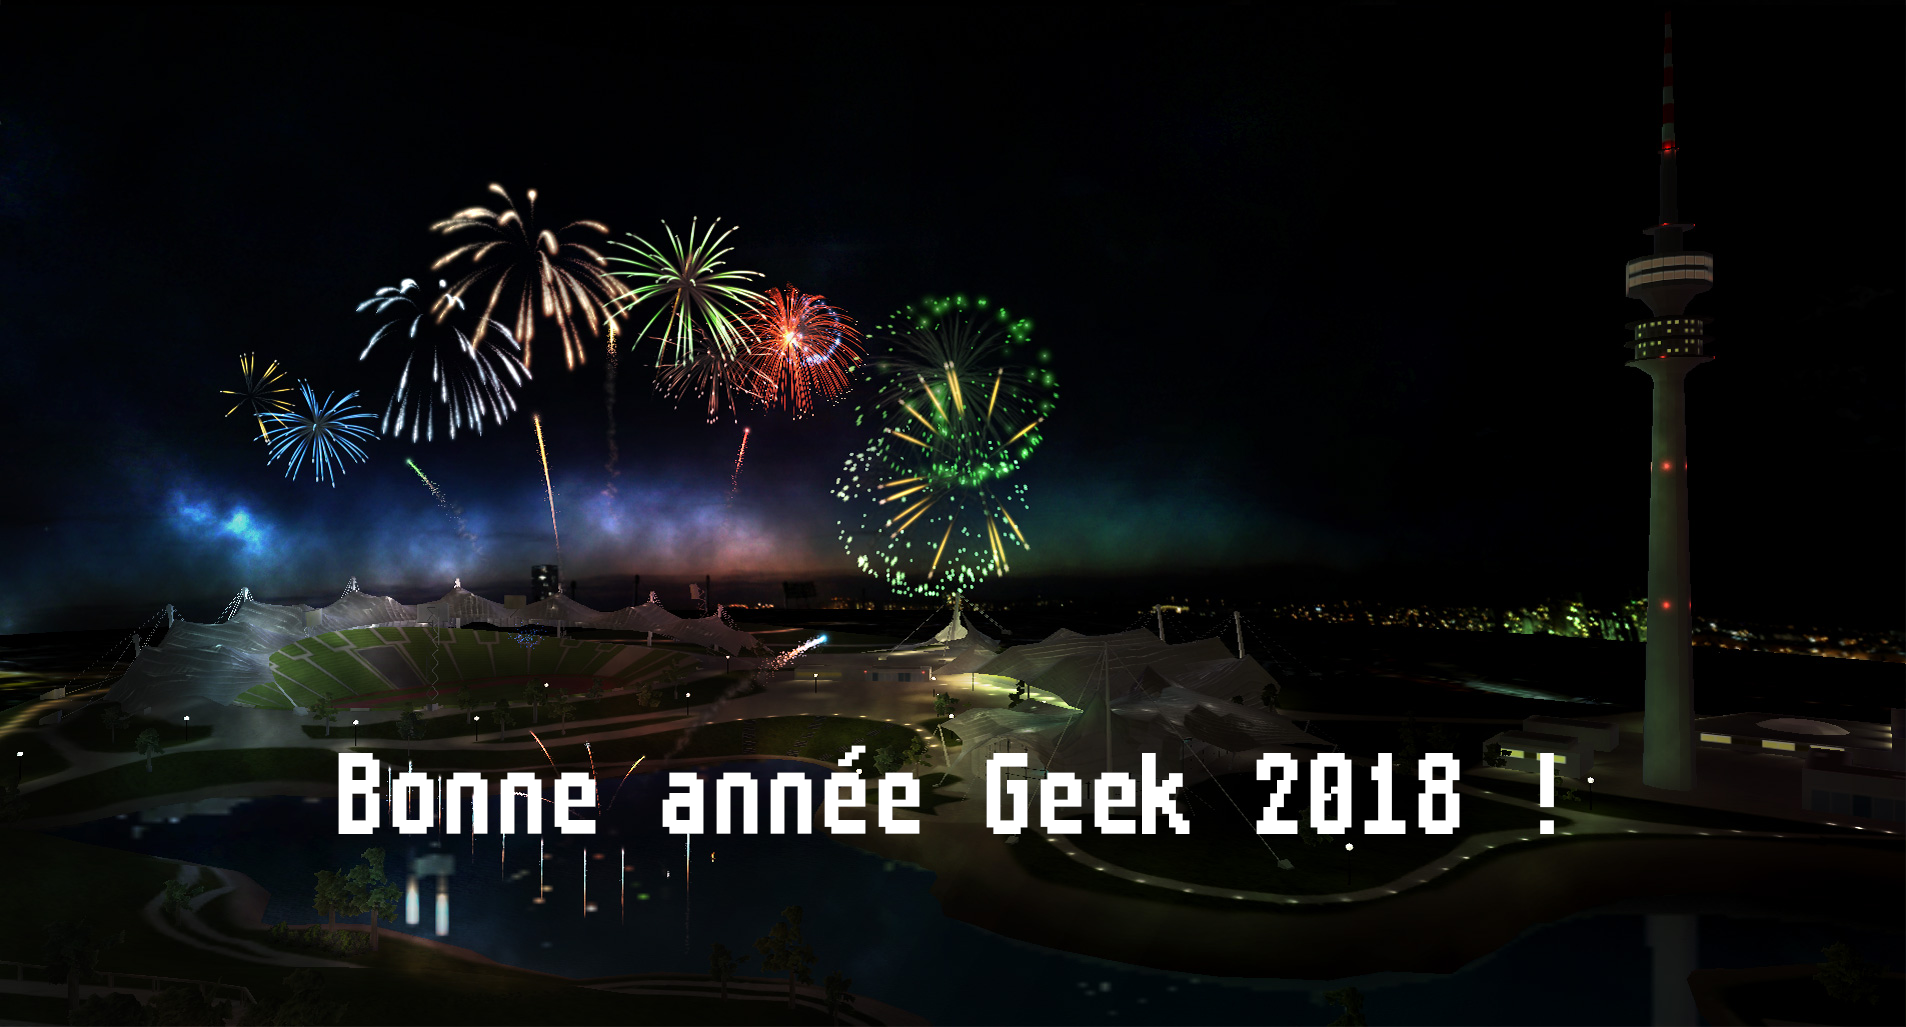 Bonne année geek 2018 !